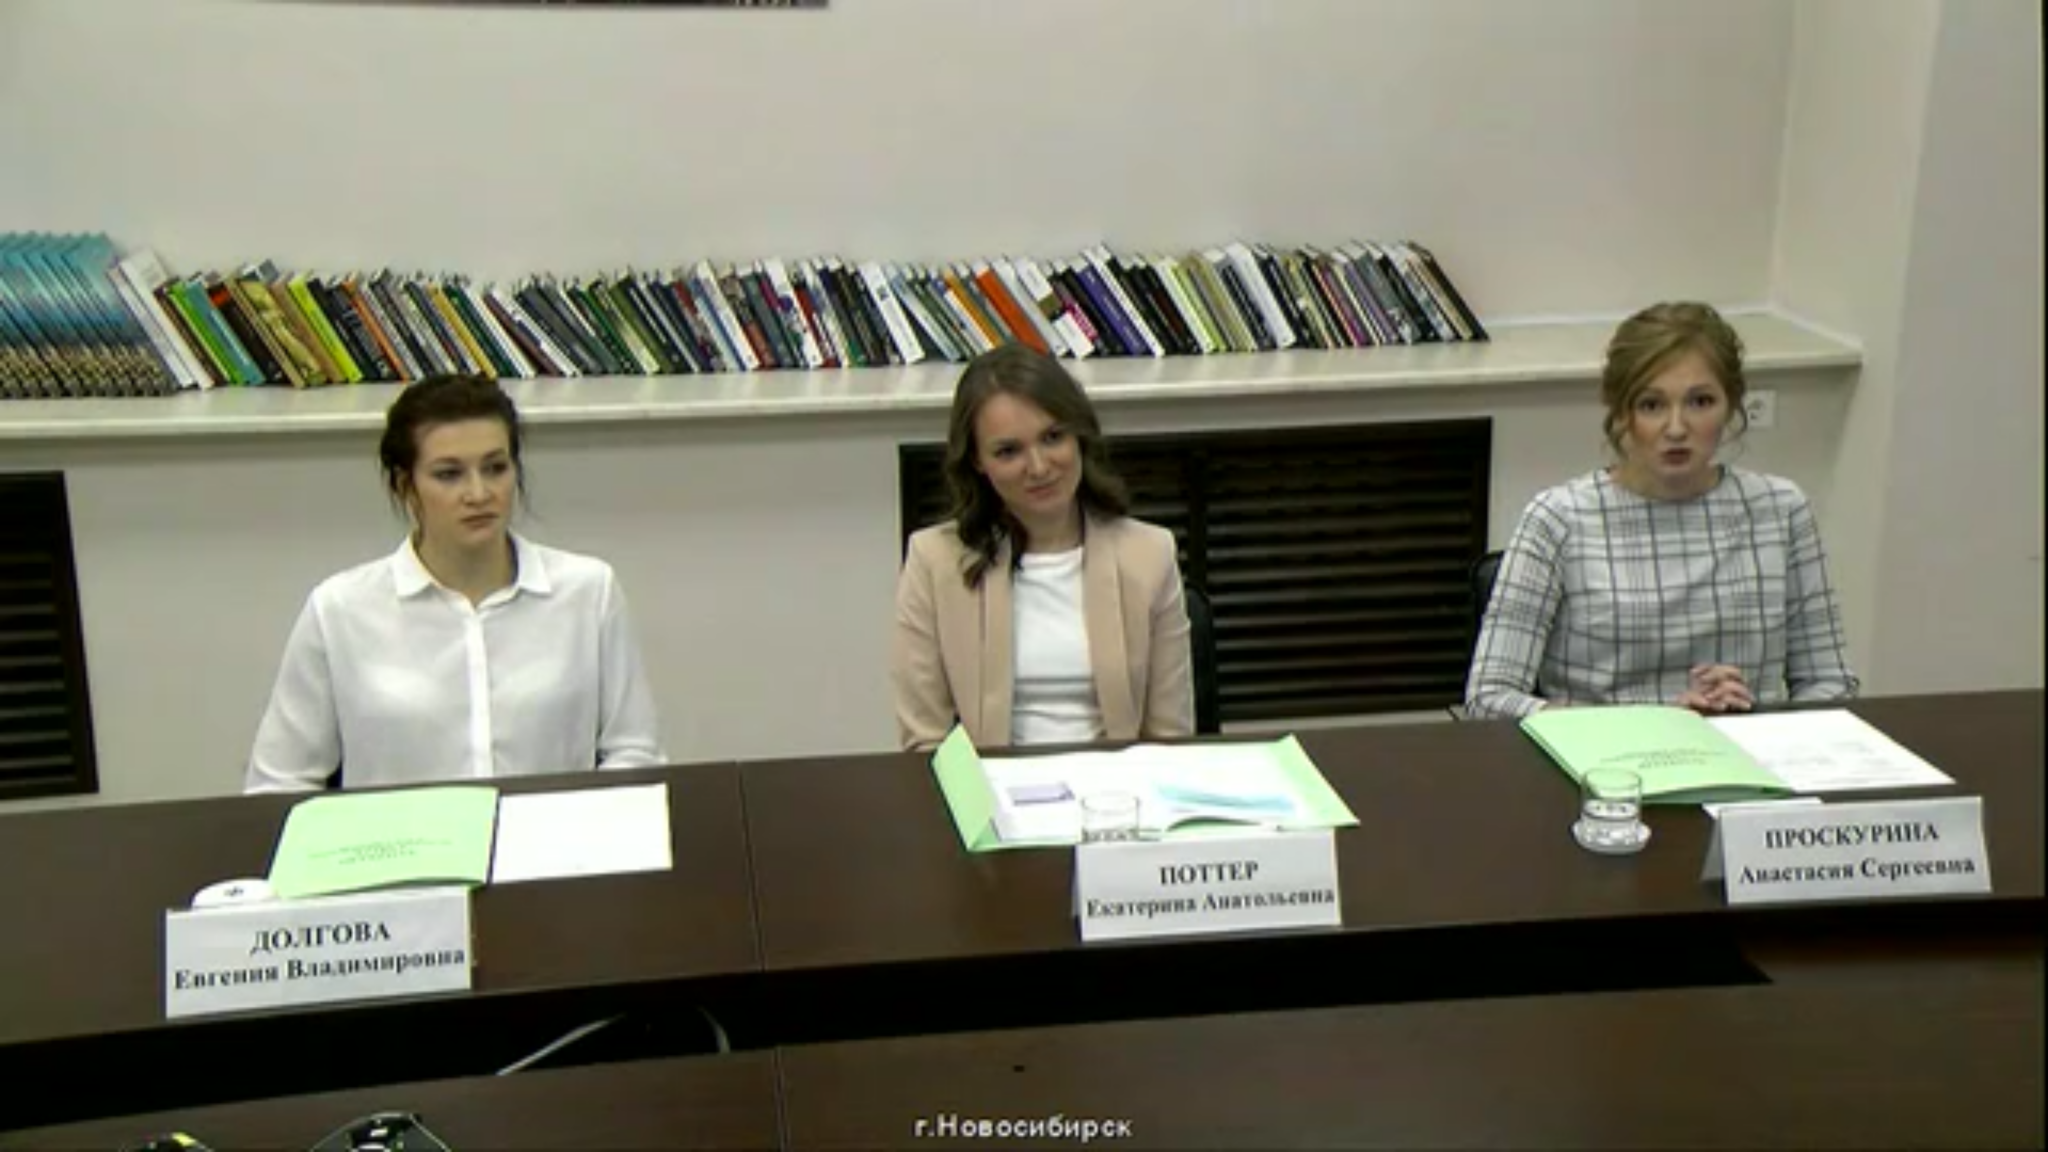 Анастасия Проскурина (справа). Скриншот видео с сайта Kremlin.ru